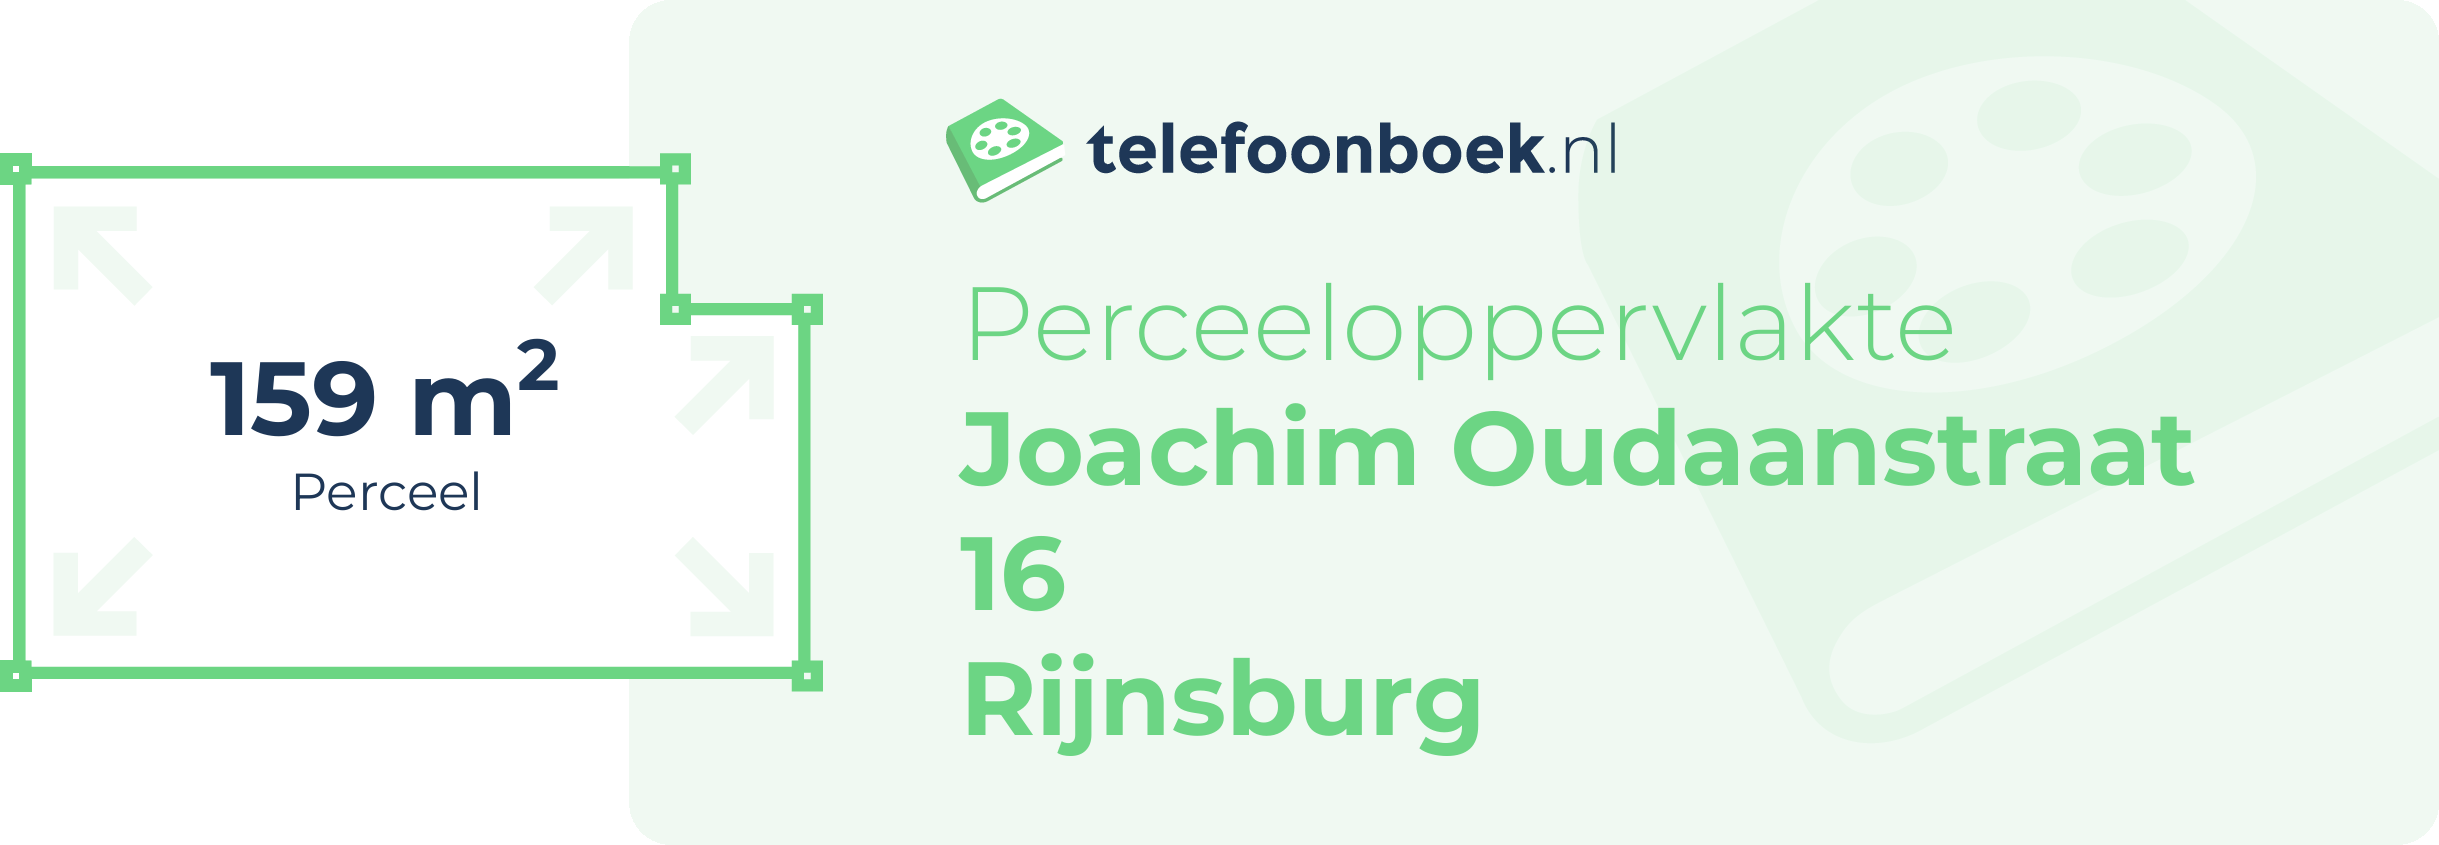 Perceeloppervlakte Joachim Oudaanstraat 16 Rijnsburg